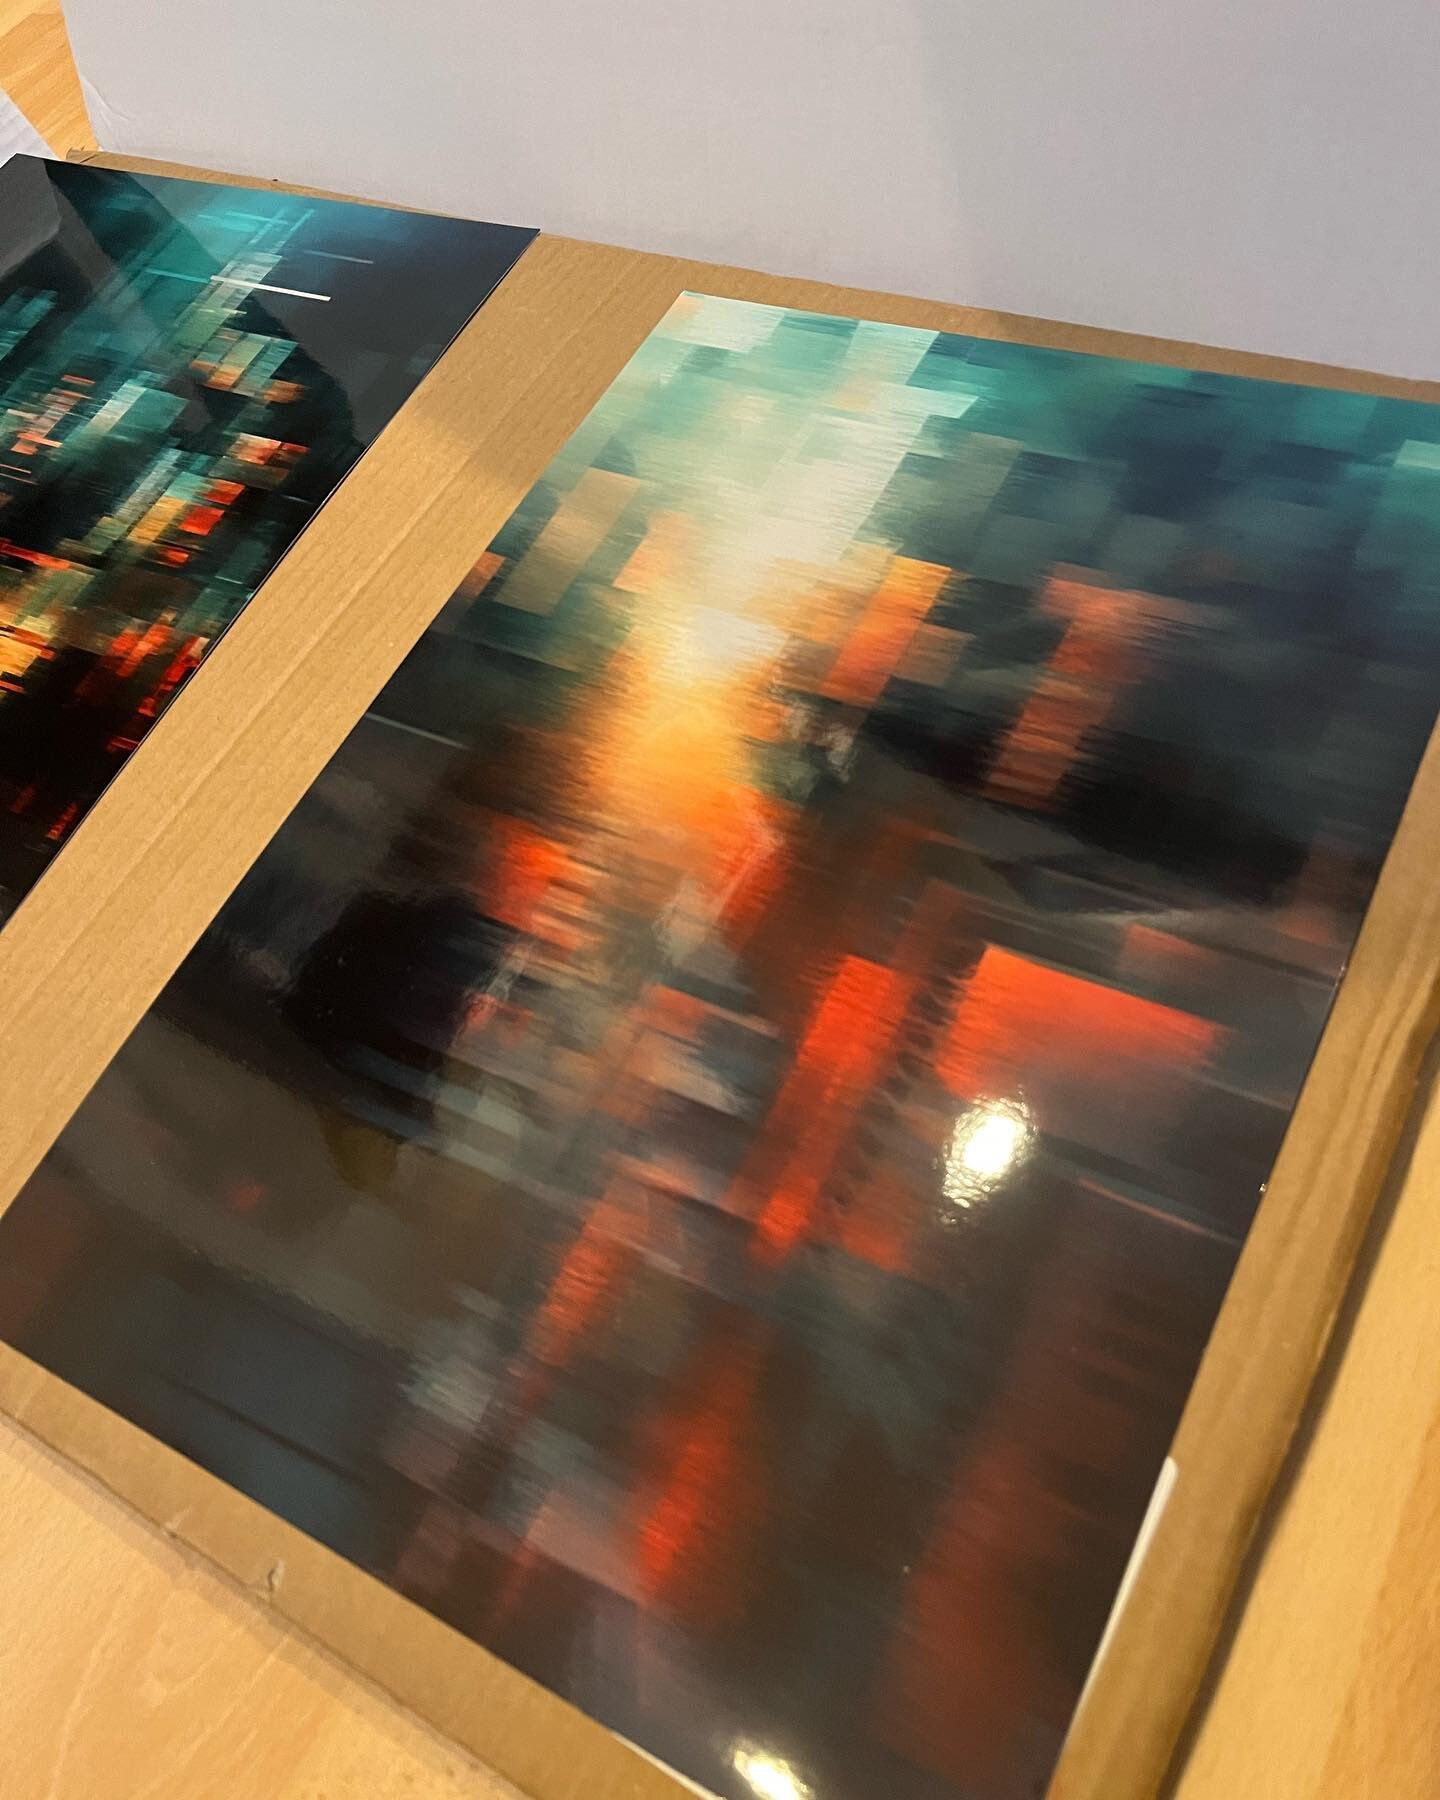 More metallic hd printing
#generative #abstract #digitalart #metallicprint #colors #redirection